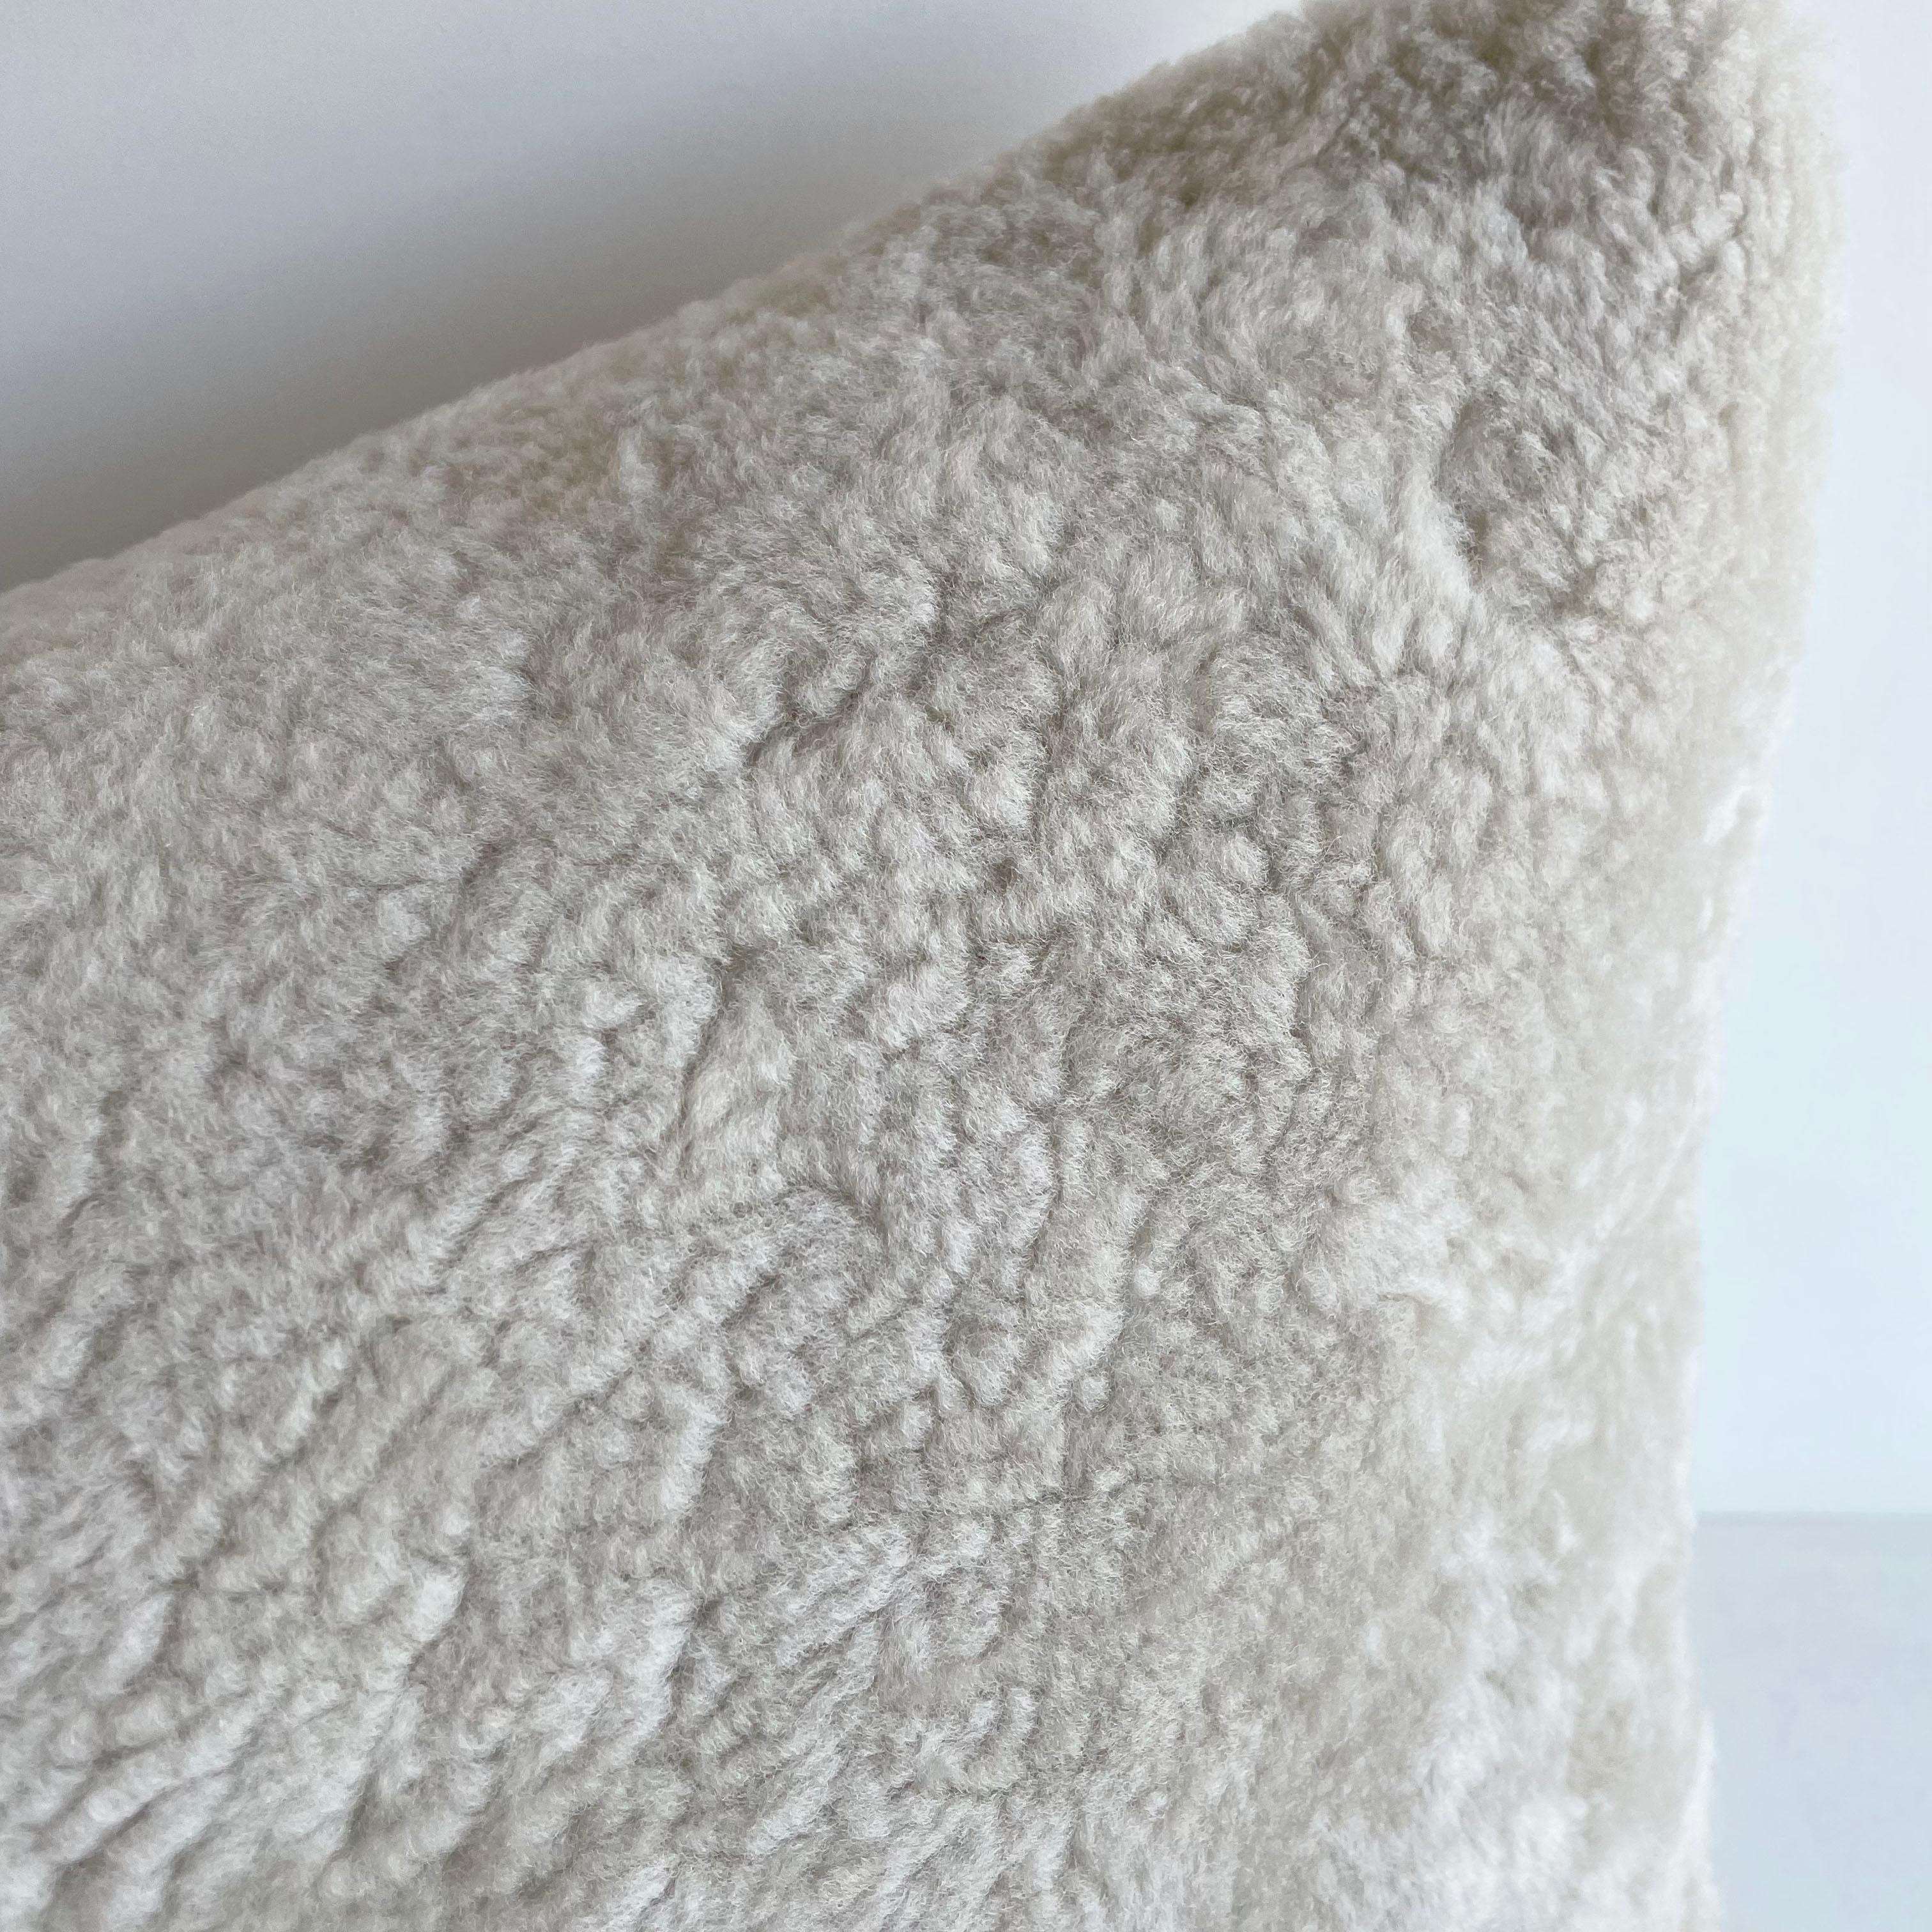 Beautiful custom made real shearling sheep lumbar pillow in oatmeal natural color
Size: 14